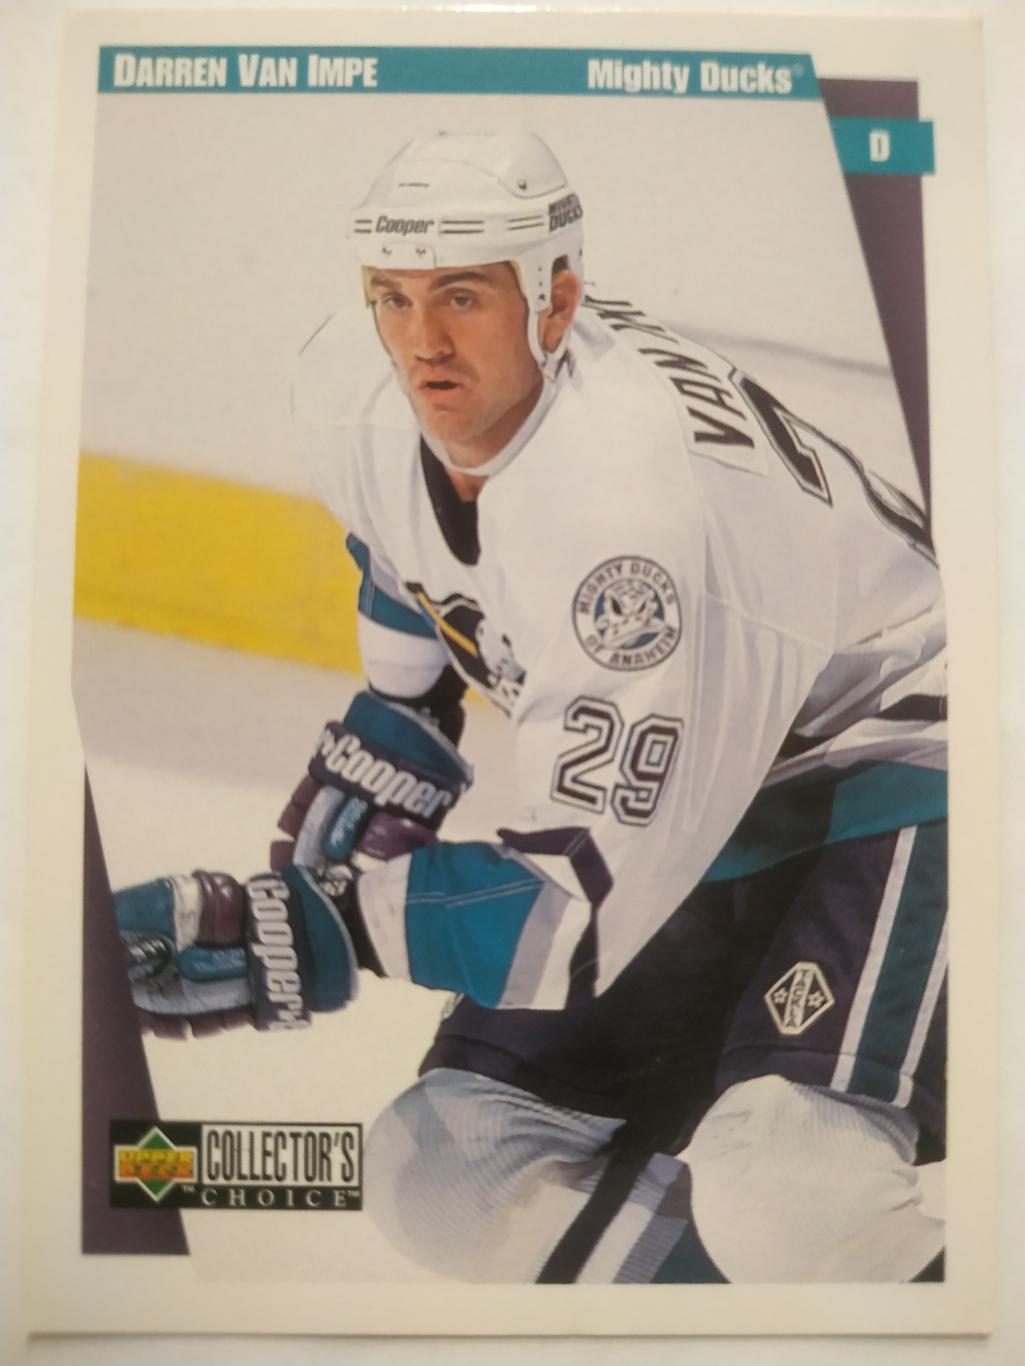 ХОККЕЙ КАРТОЧКА НХЛ UPPER DECK 1997-98 NHL DARREN VAN IMPE MIGHTY DUCKS #4